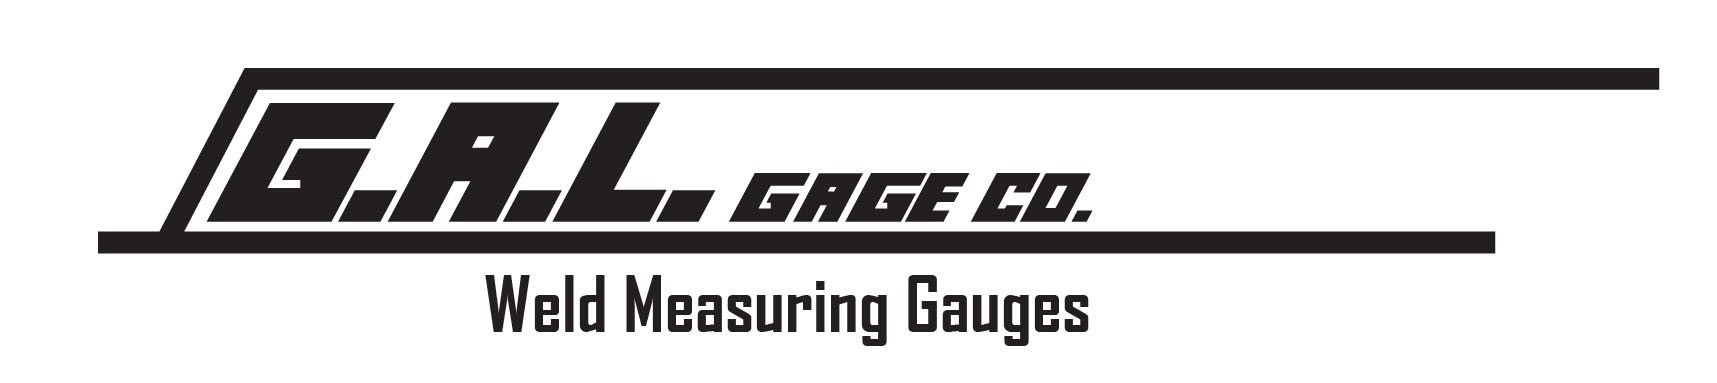 G.A.L Gage公司